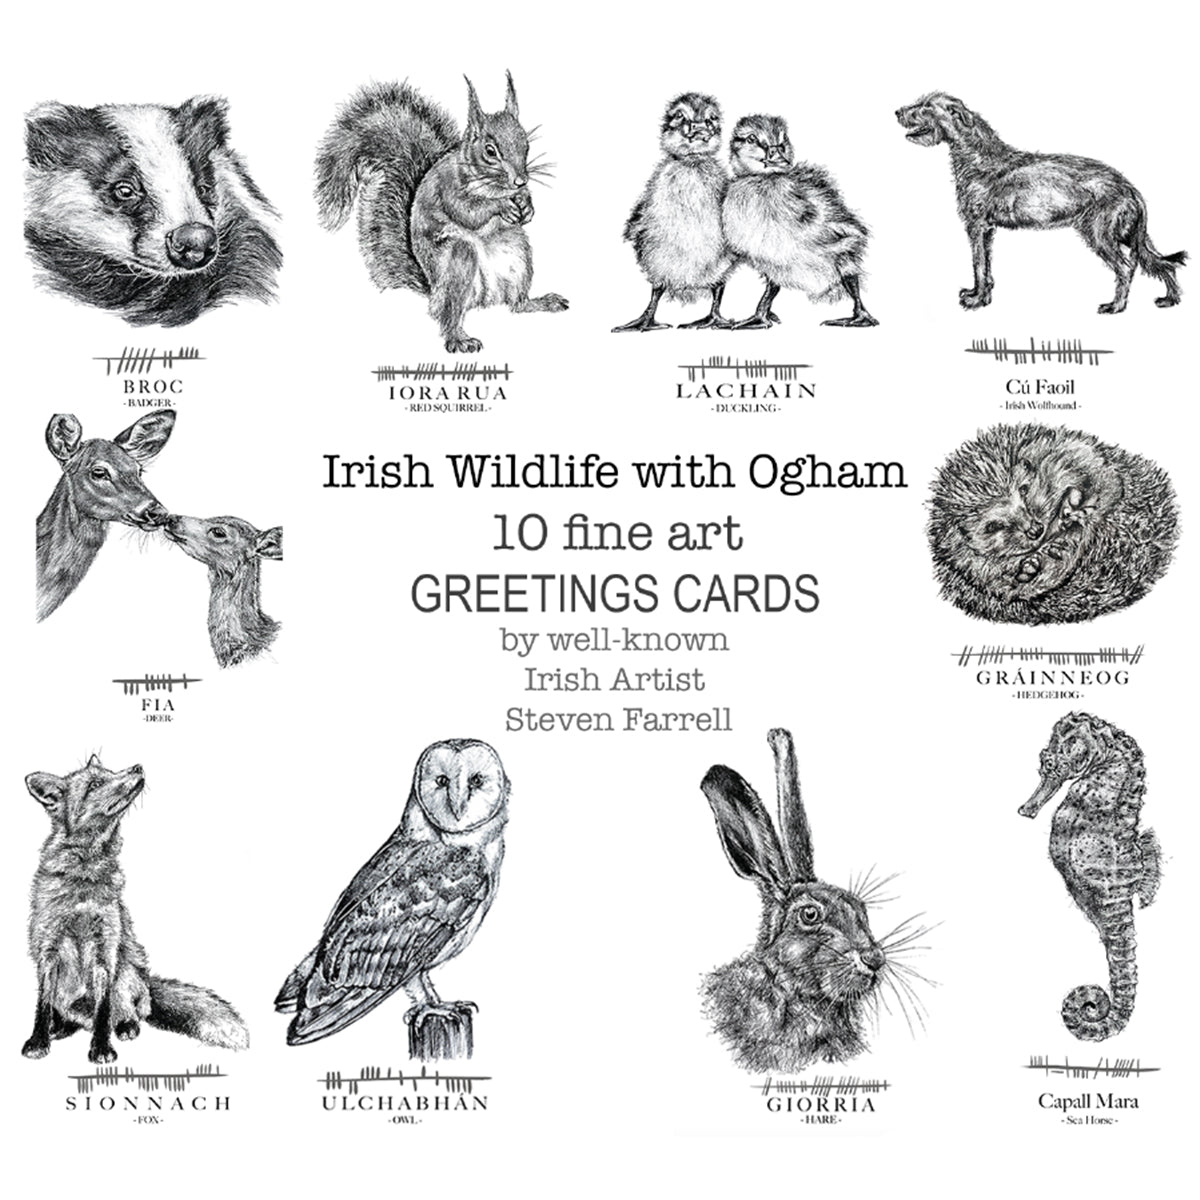 Irish-Wildlife-greetings-cards-animals-Ogham-language